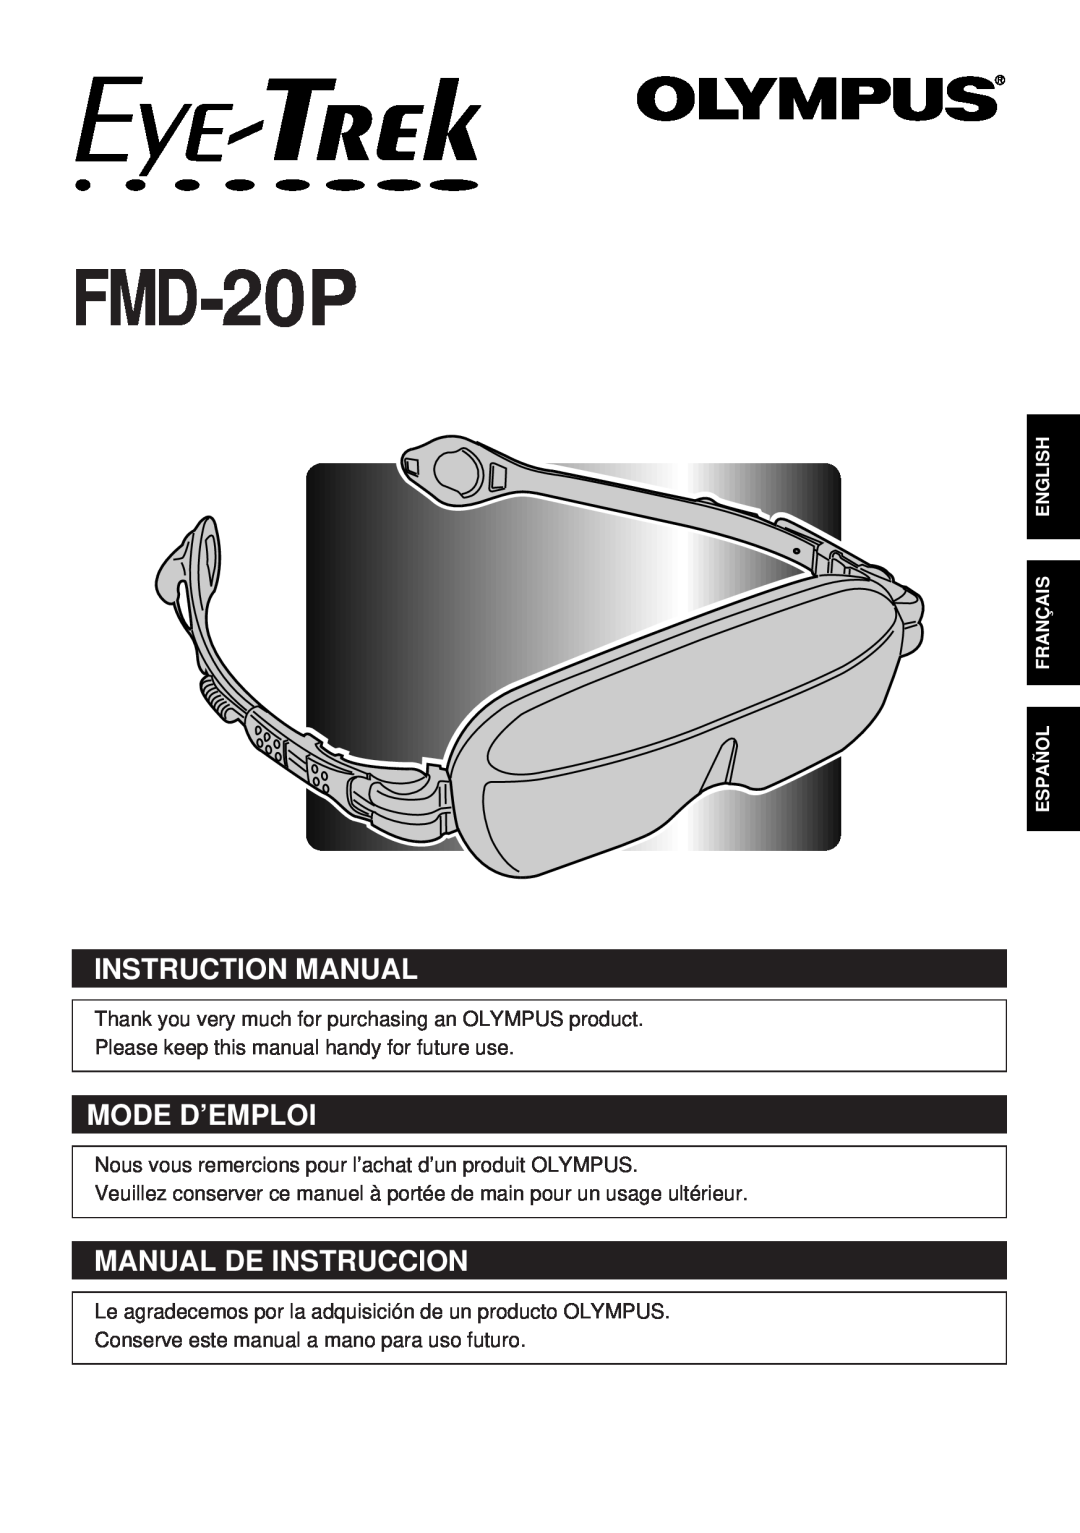 Olympus SCPH-10130U instruction manual FMD-20P, Mode D’Emploi, Manual De Instruccion 